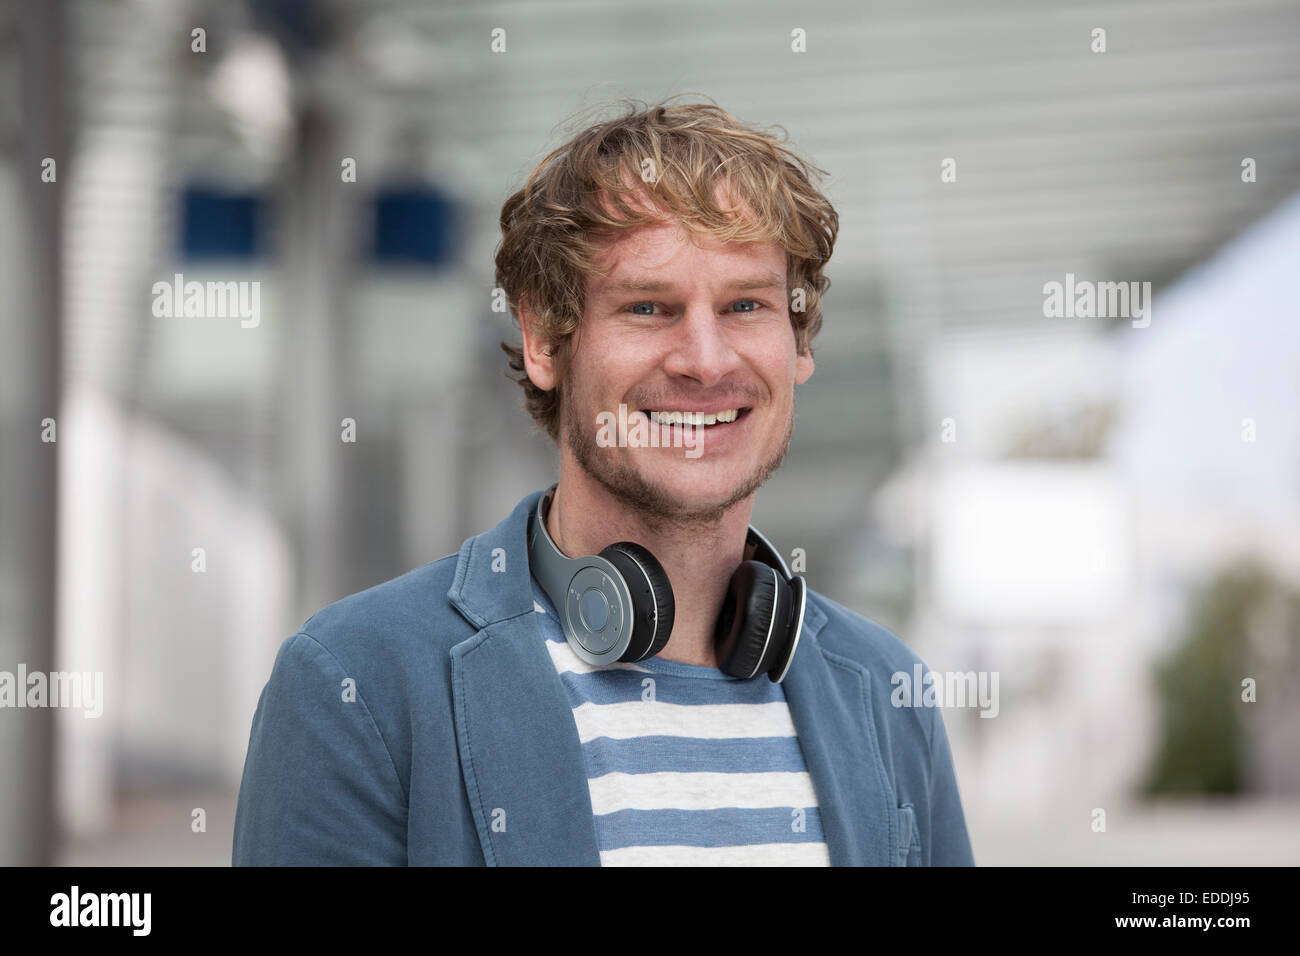 Portrait of smiling man with headphones Stock Photo